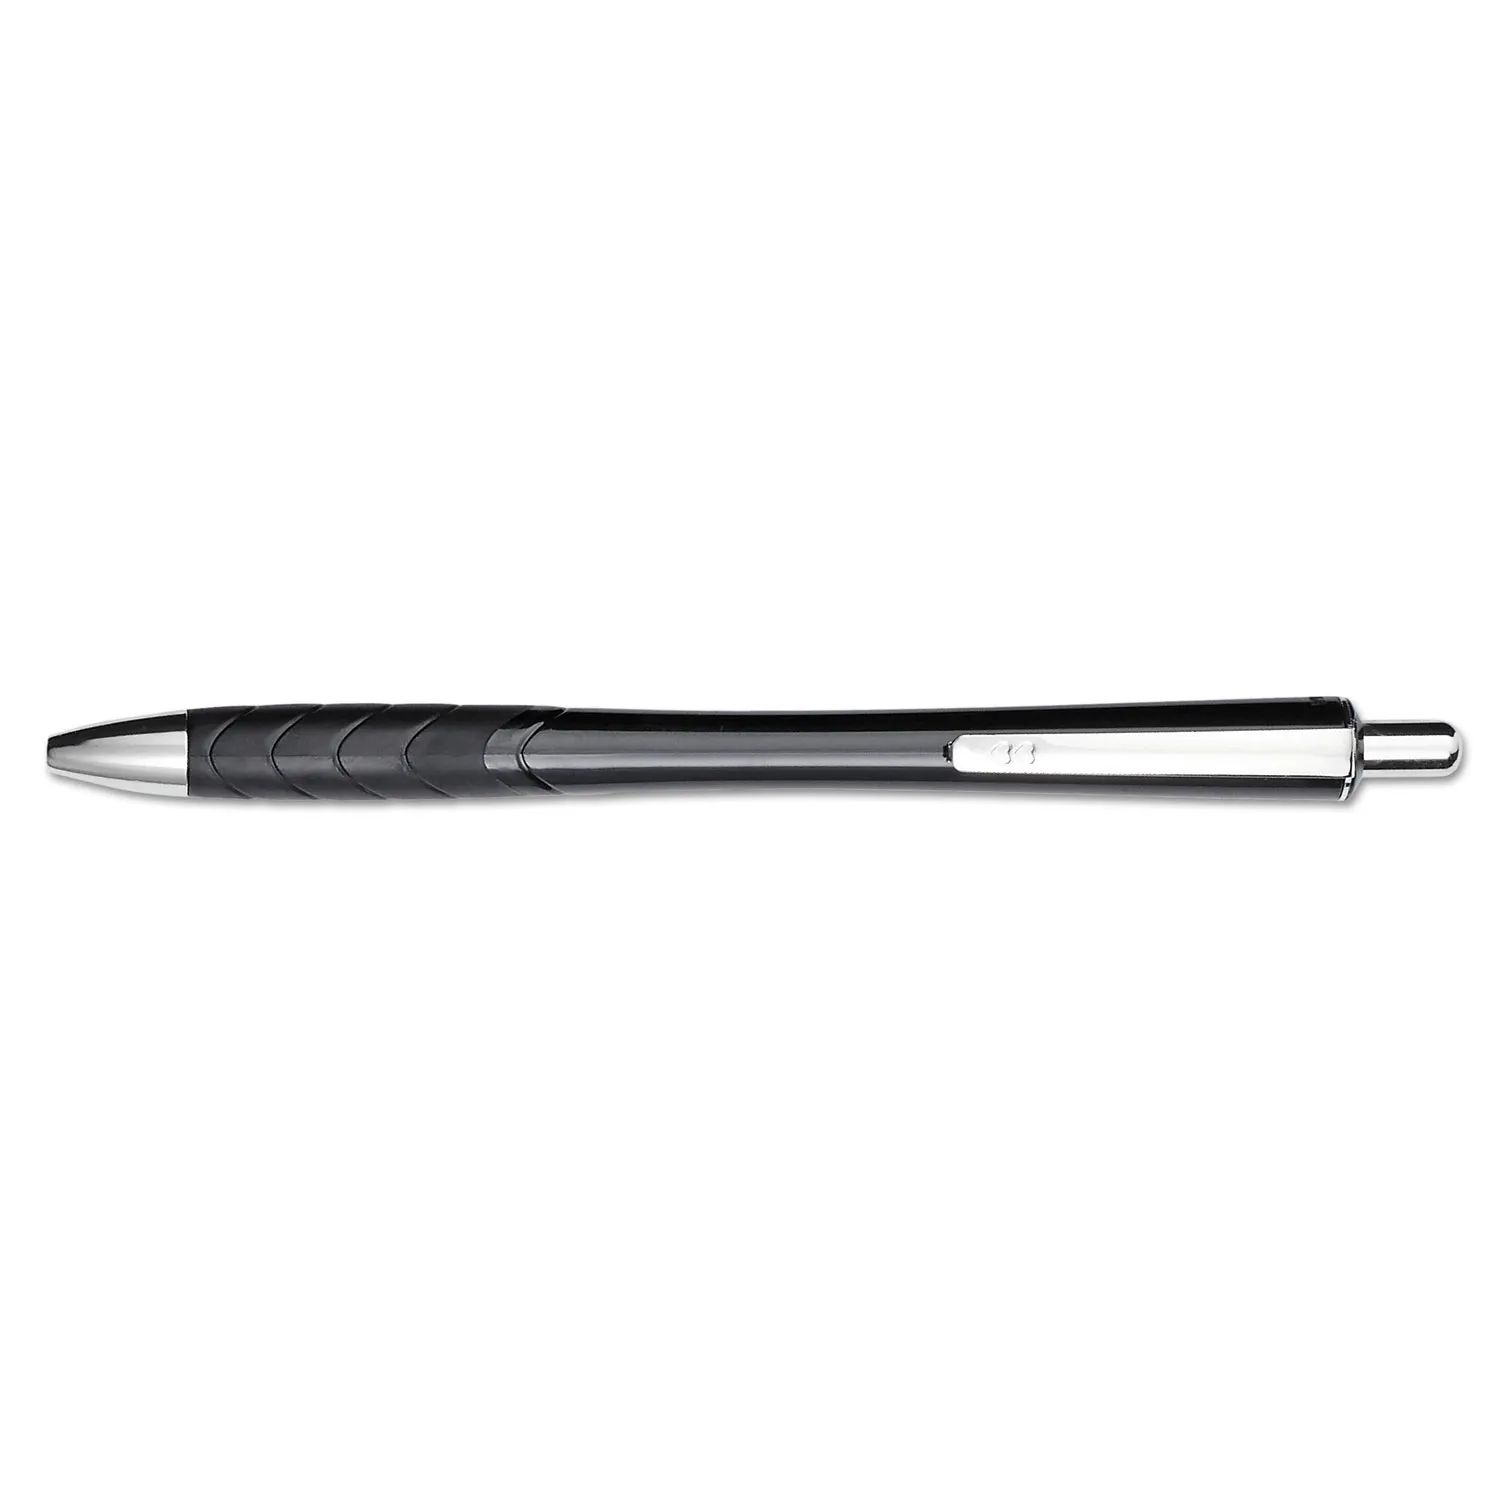 6x Rubber Eraser Pencil Erasing Pen High-Gloss Soft for Drawing Correction